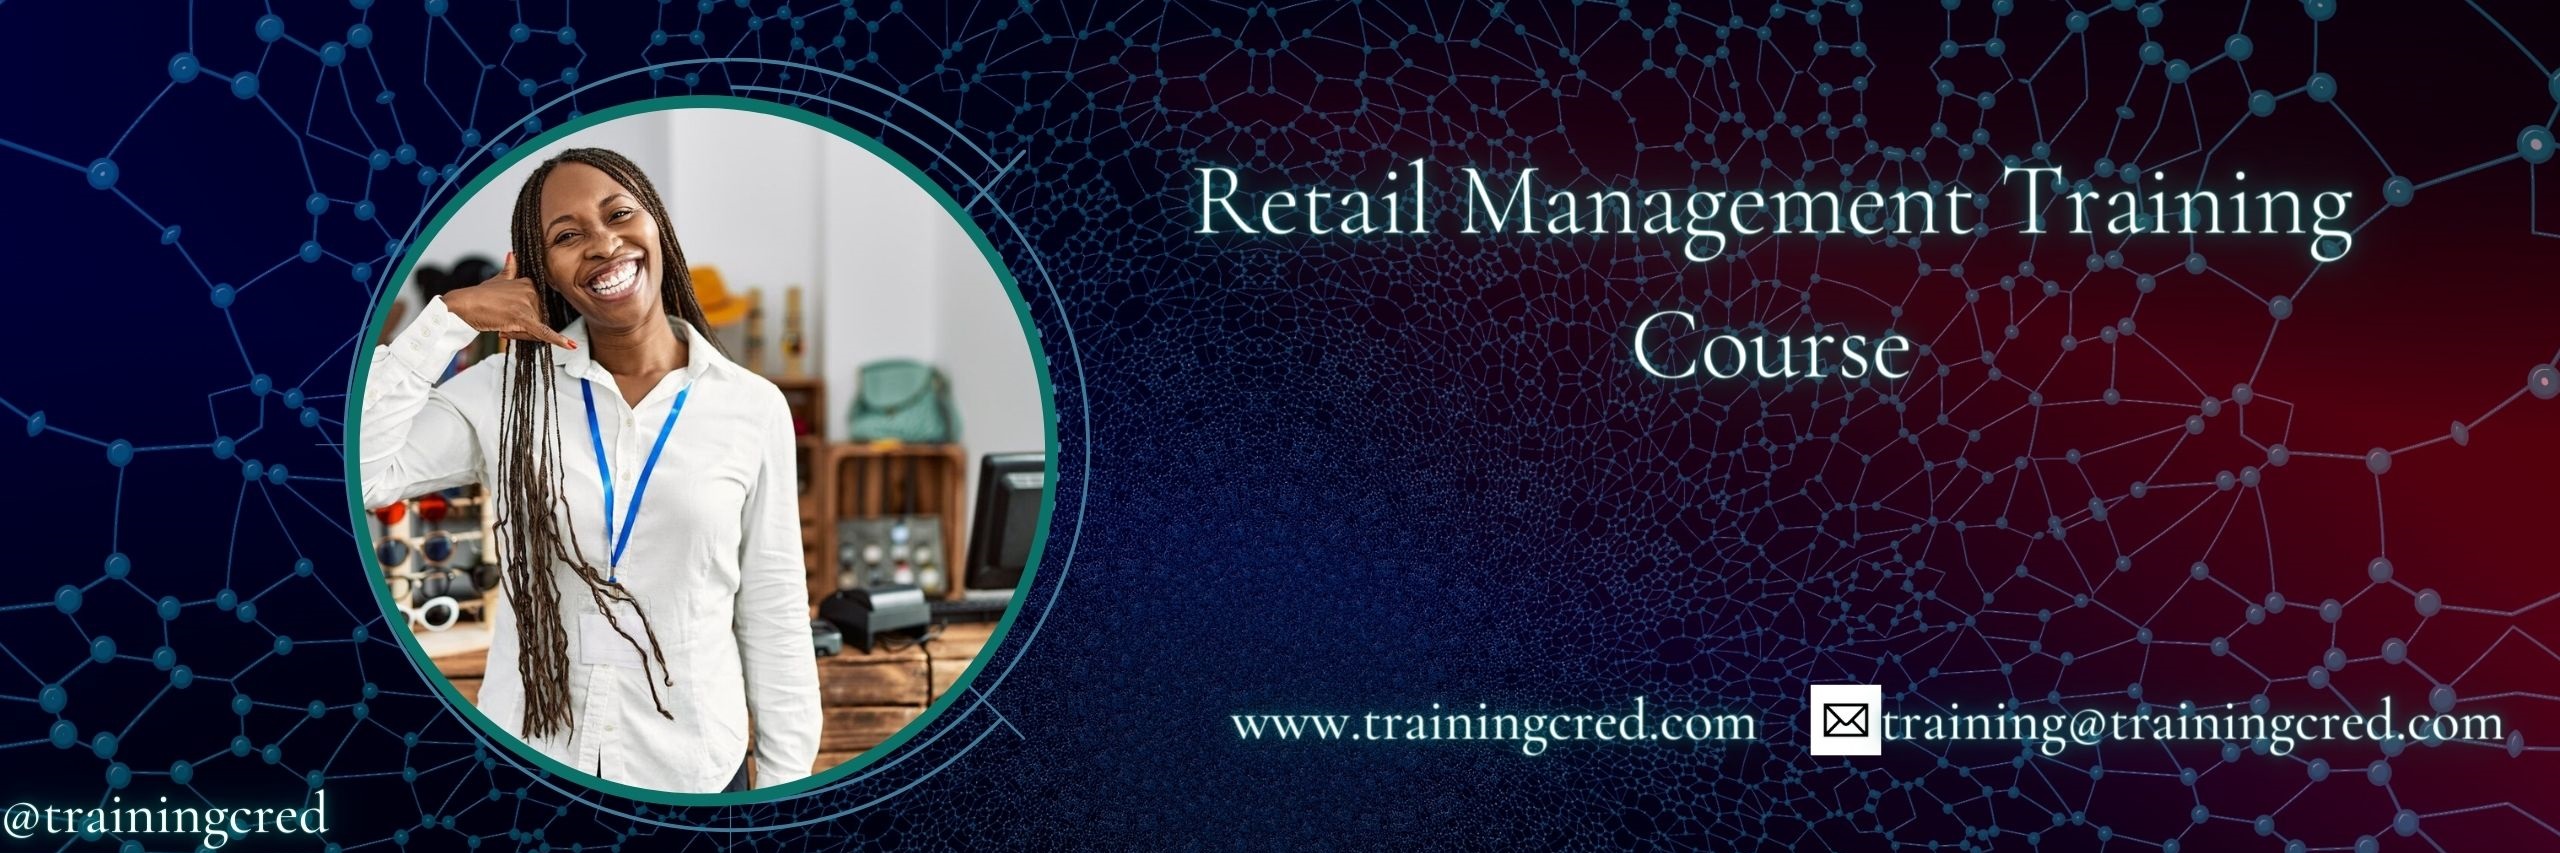 Retail Management Training